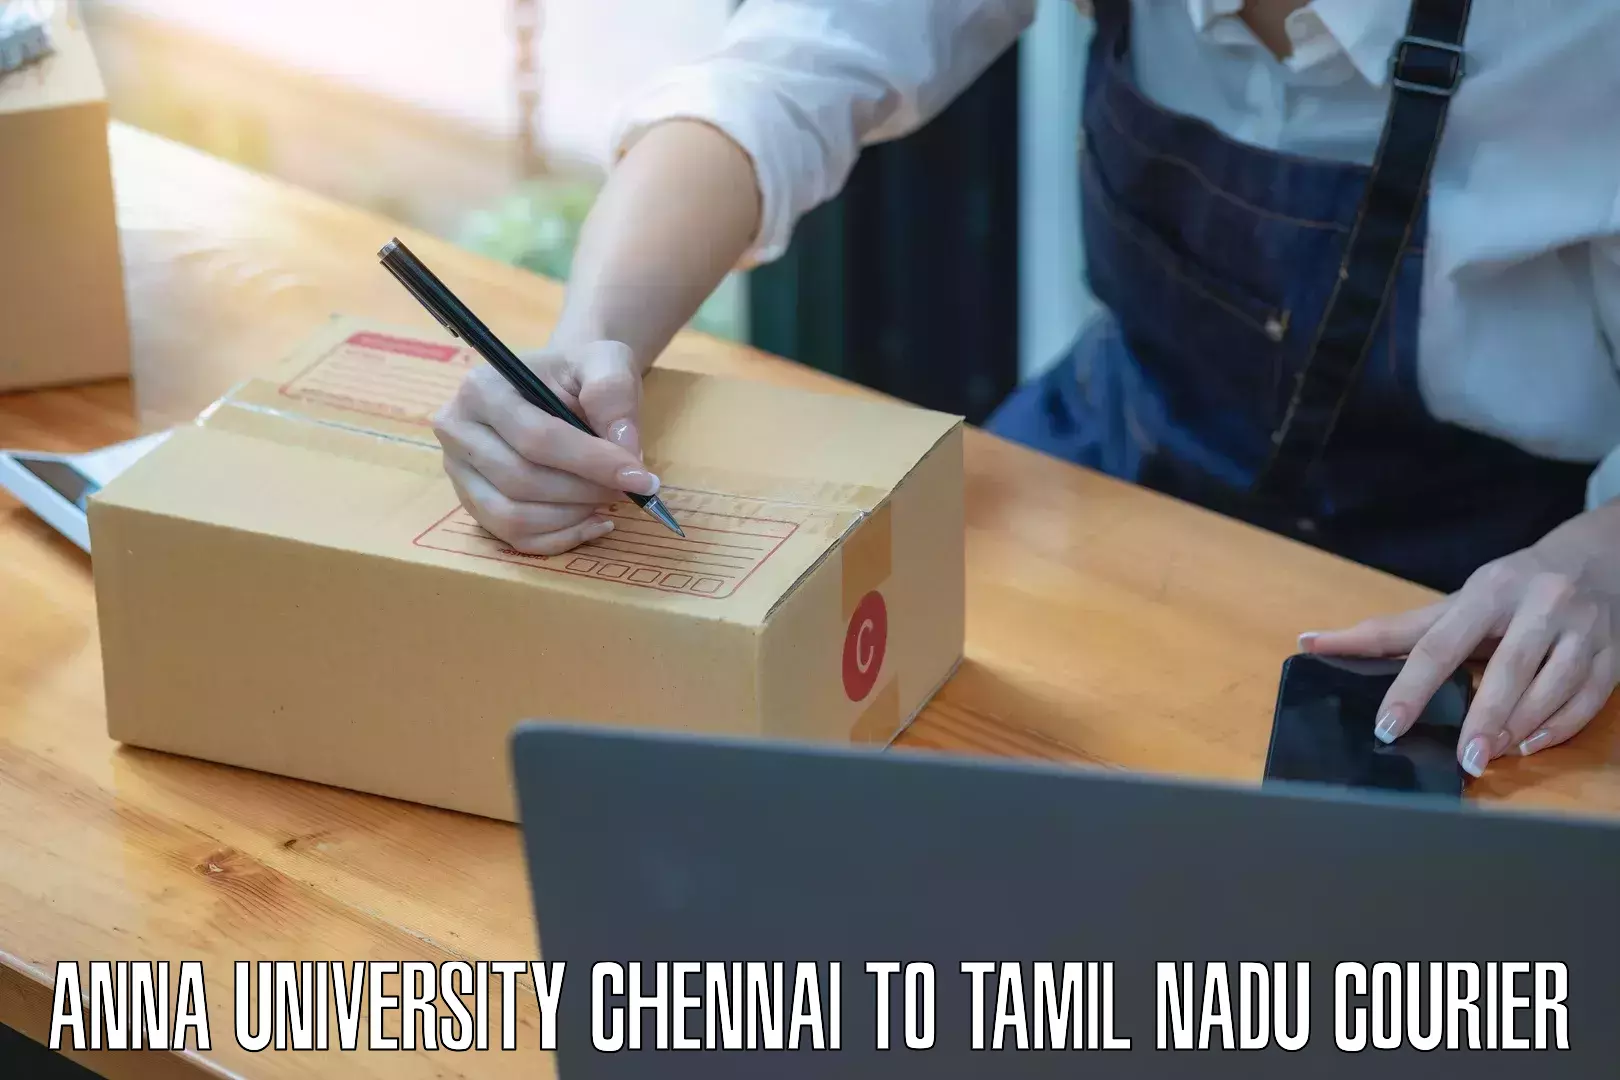 Urgent courier needs Anna University Chennai to Chennai Port